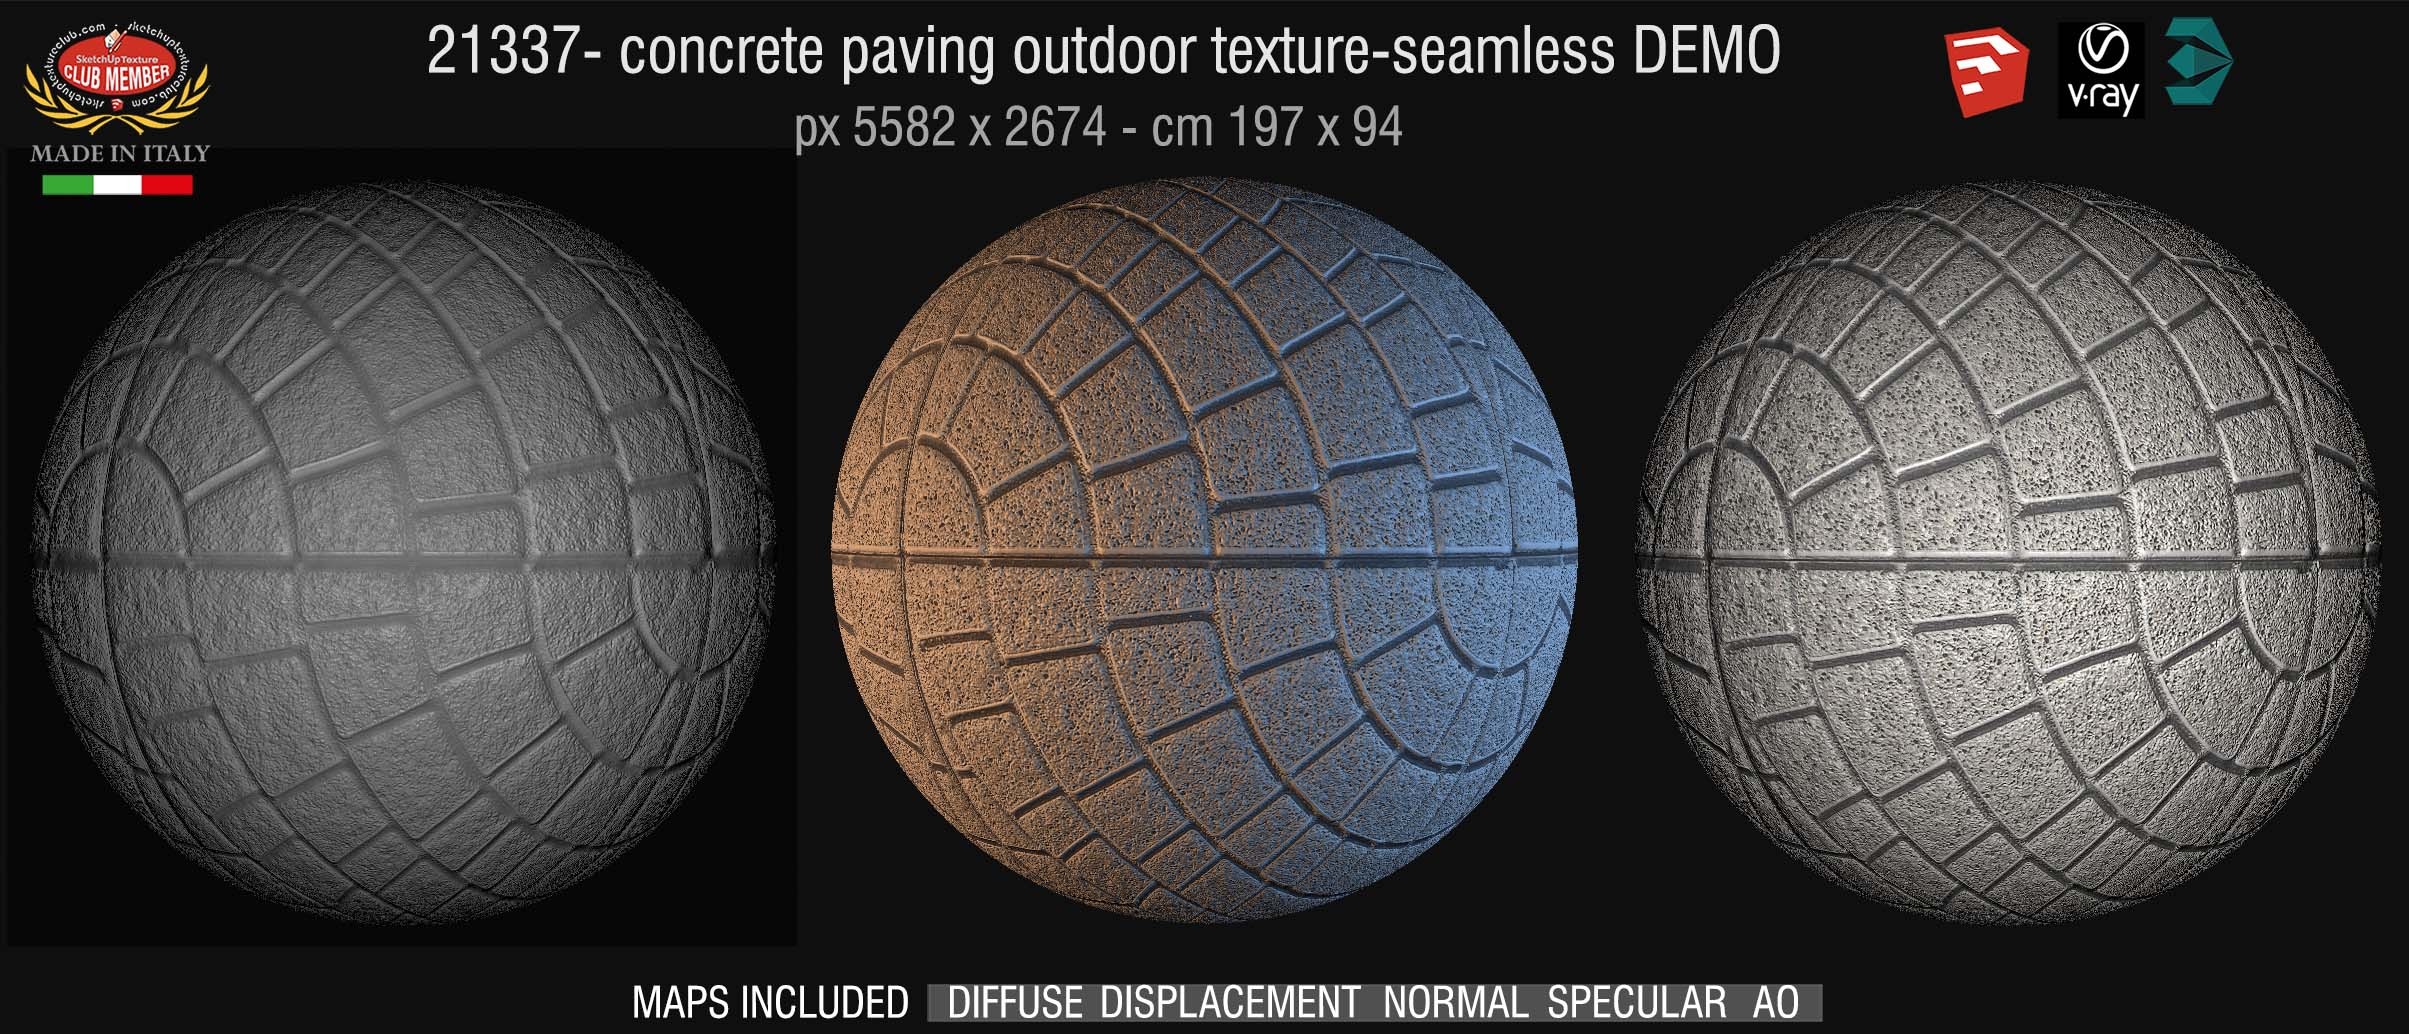 21337 concrete paving outdoor texture seamless + maps DEMO